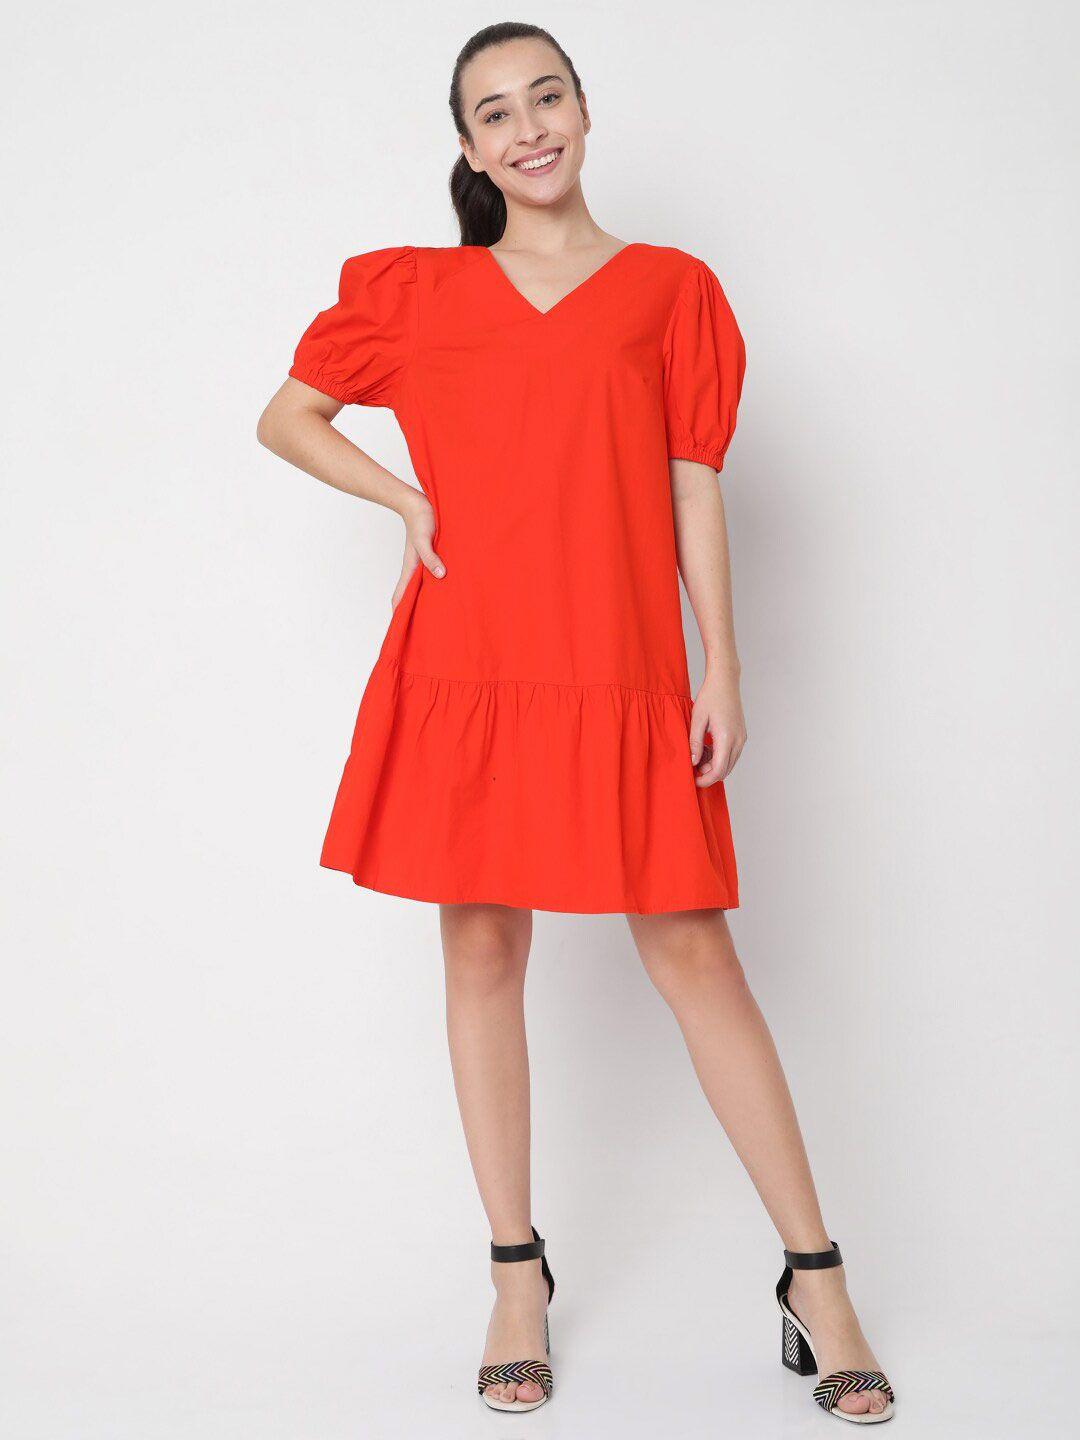 vero moda orange cotton drop-waist dress